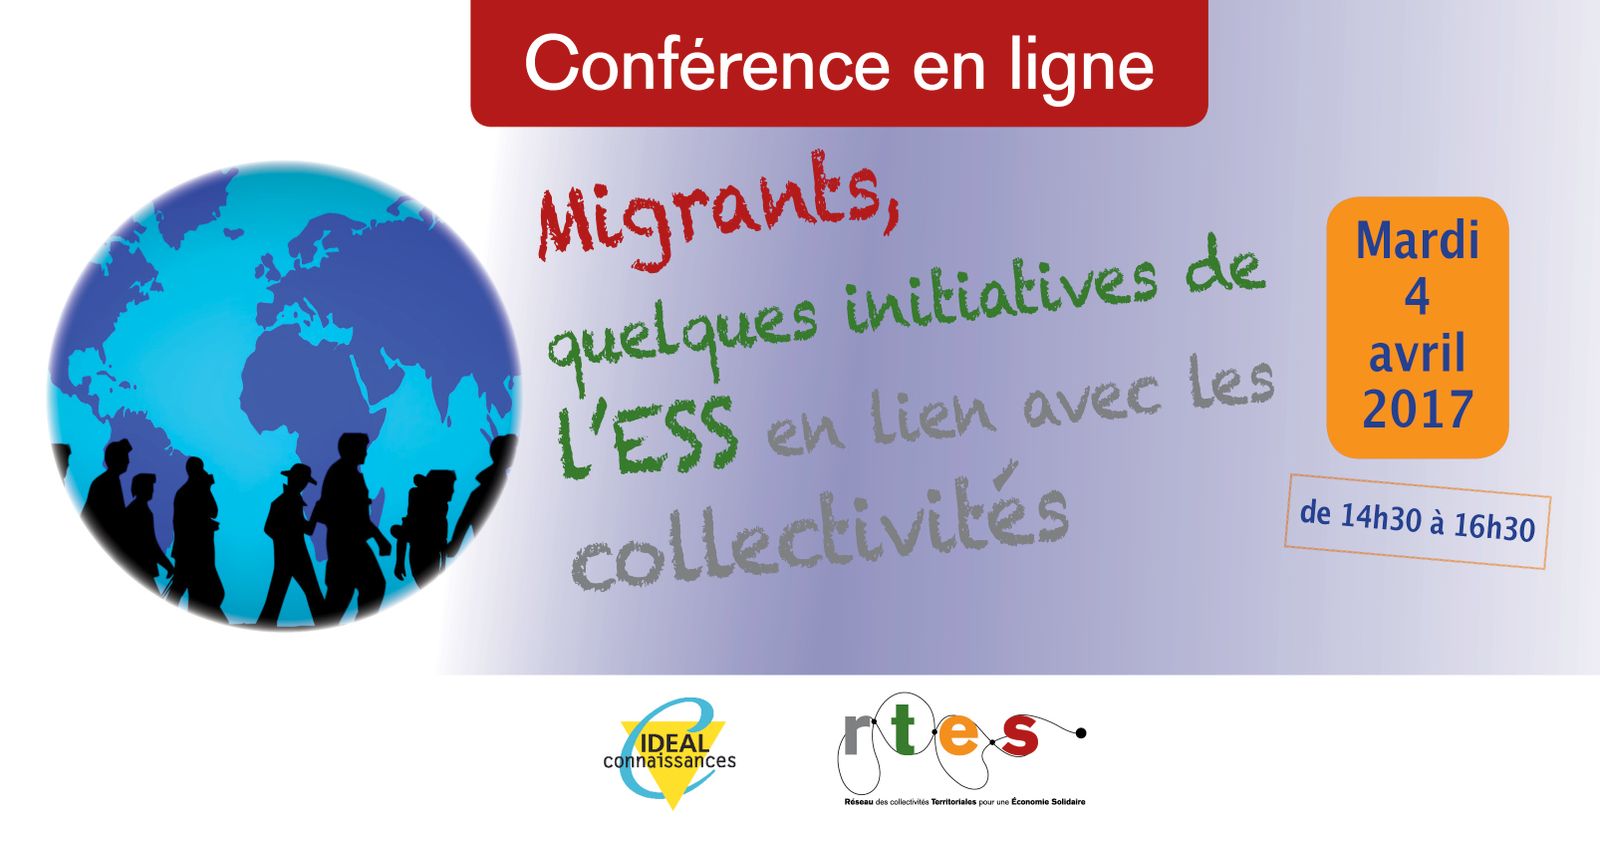 Migrants, quelques initiatives de l’ESS en lien avec les collectivités